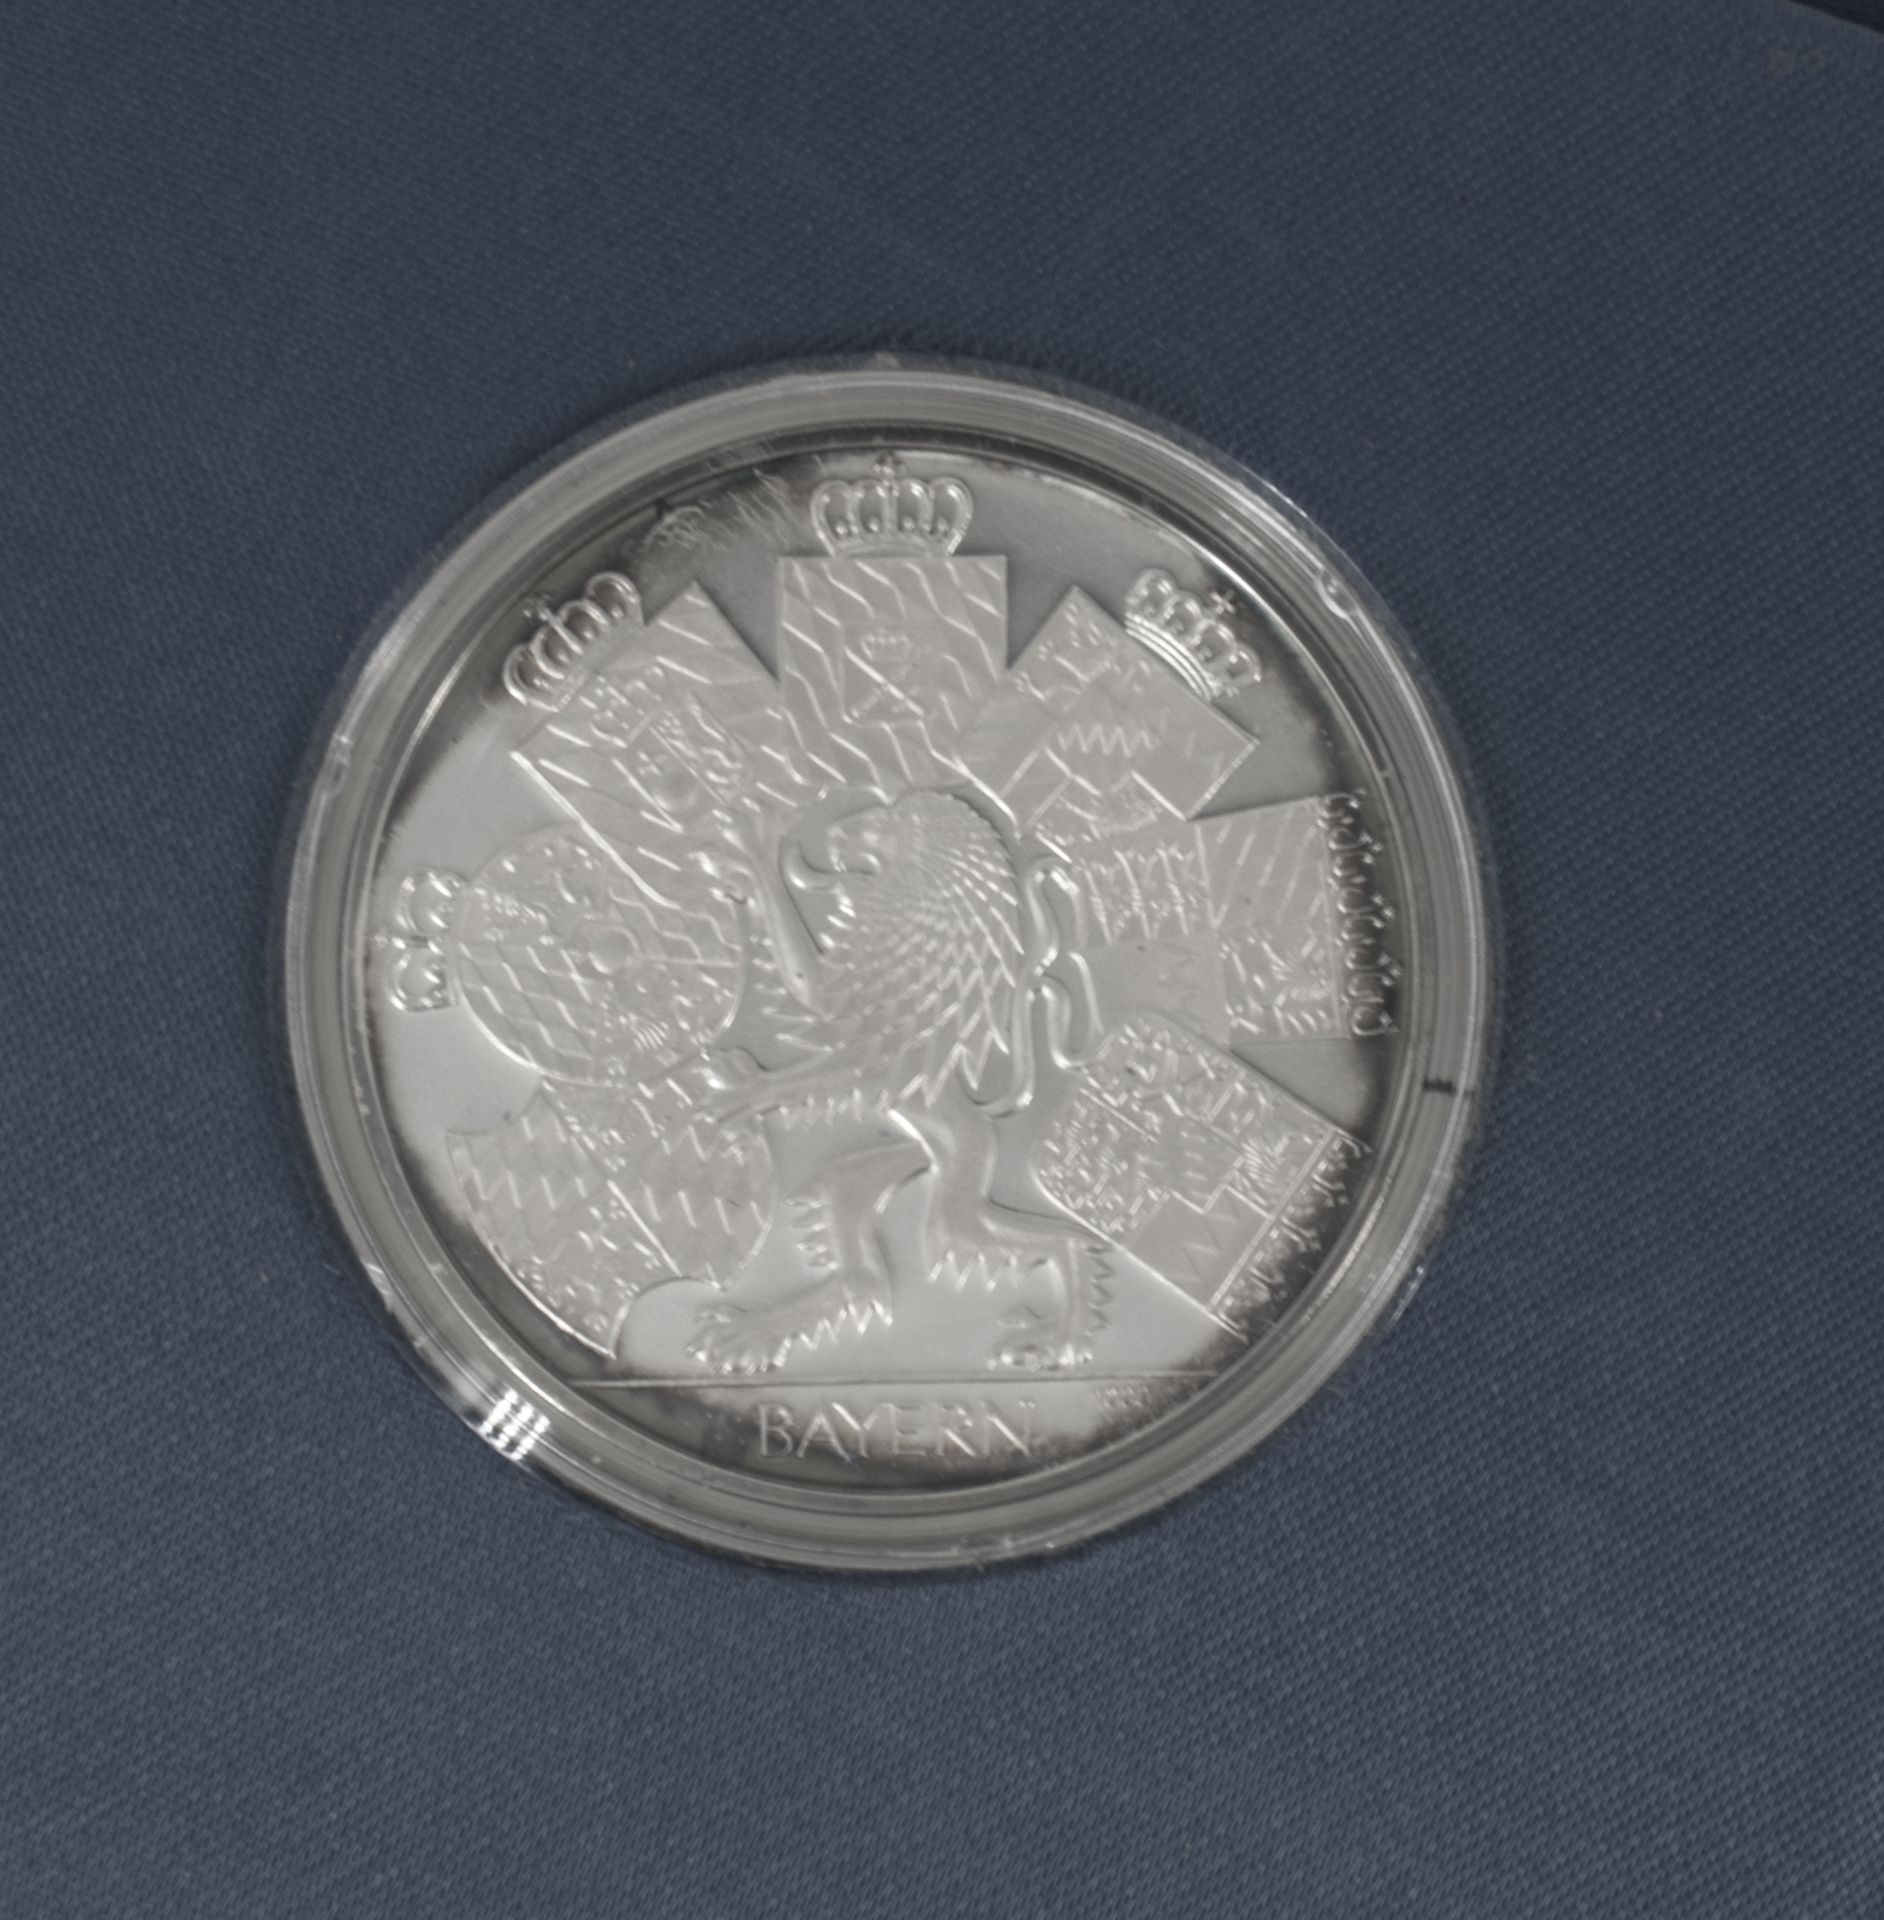 Bayern, Silbermedaille Wittelsbach Stiftung. Silber 1000, Gewicht: ca. 40 g, Durchmesser: ca. 45 mm.